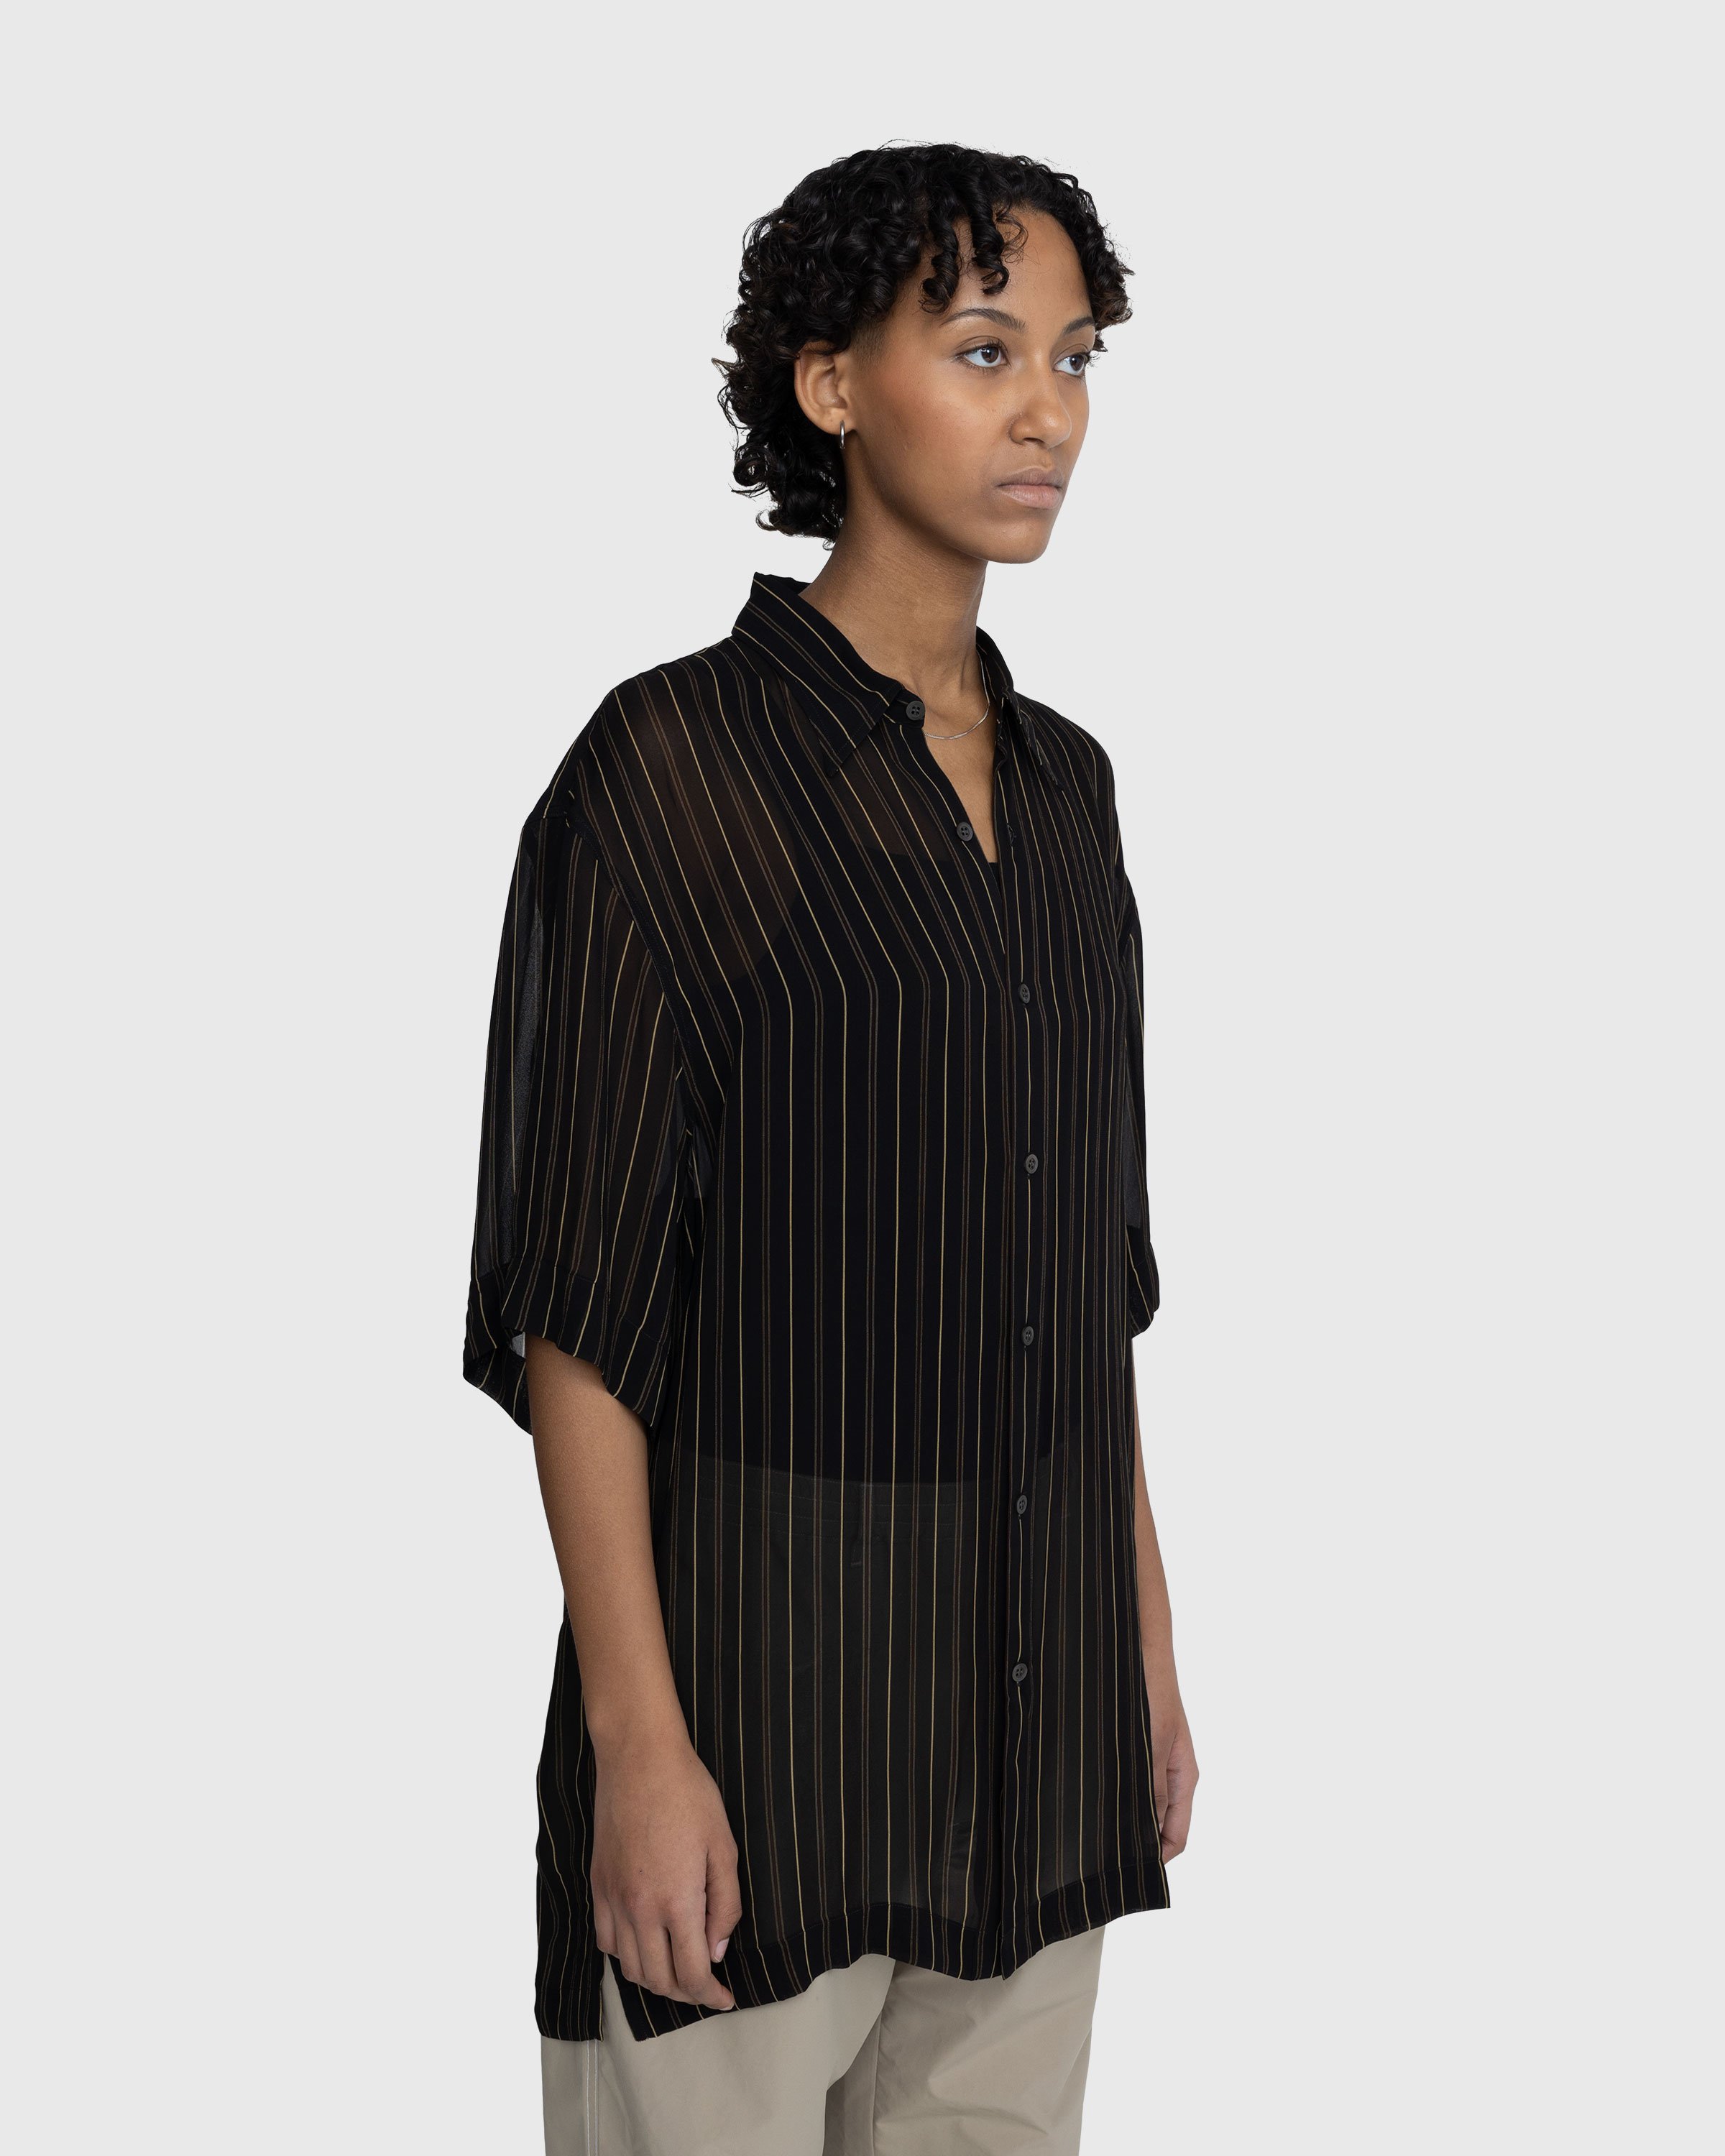 Dries van Noten - Cassidye Shirt Black - Clothing - Black - Image 4